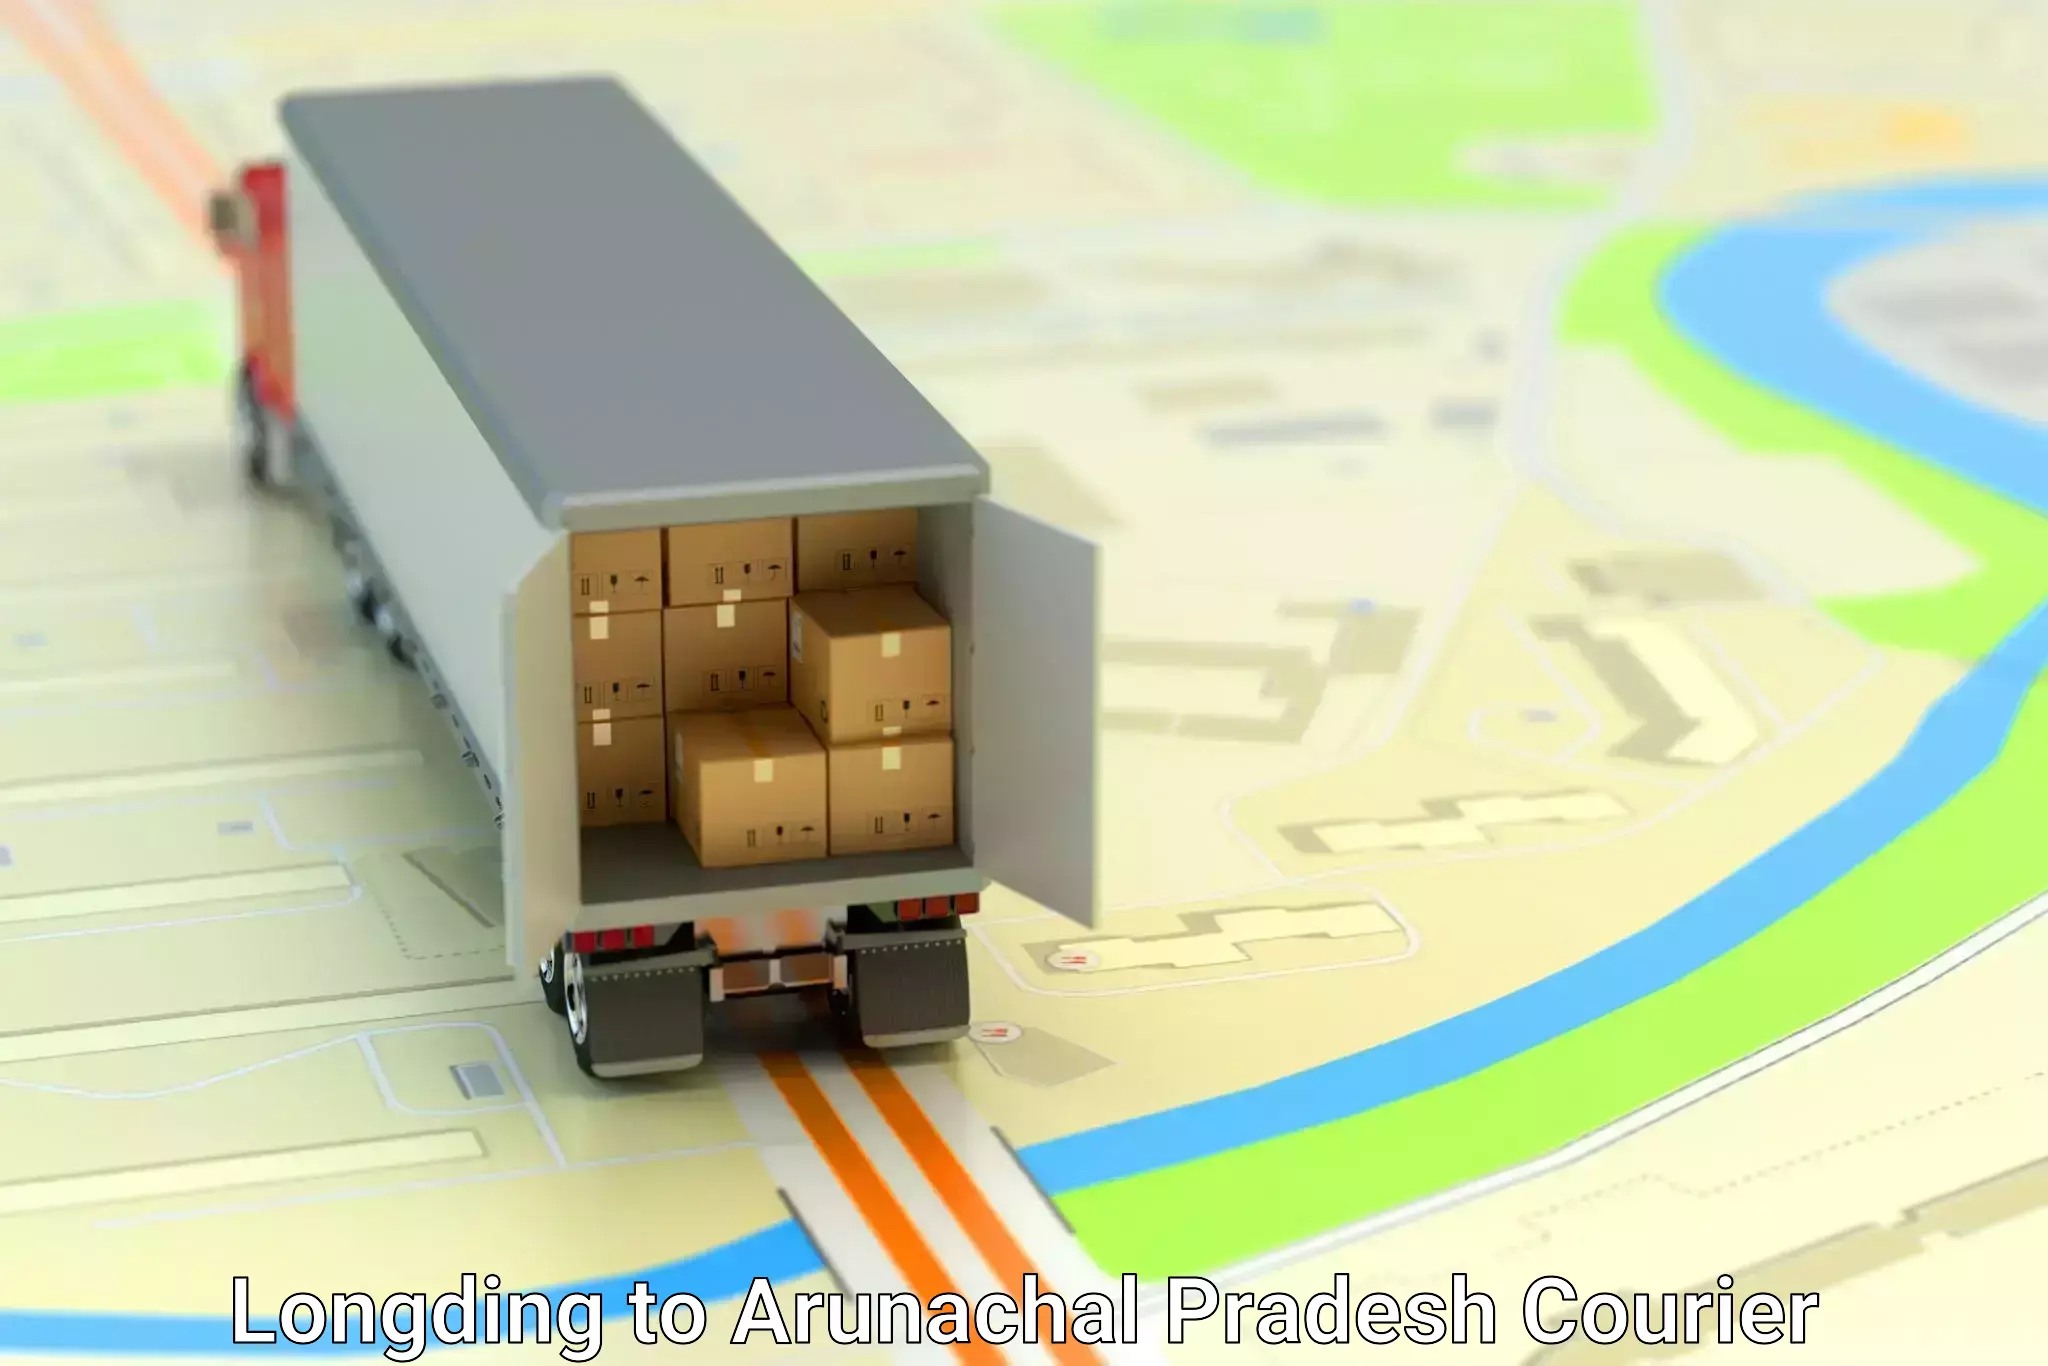 Package delivery network Longding to Arunachal Pradesh